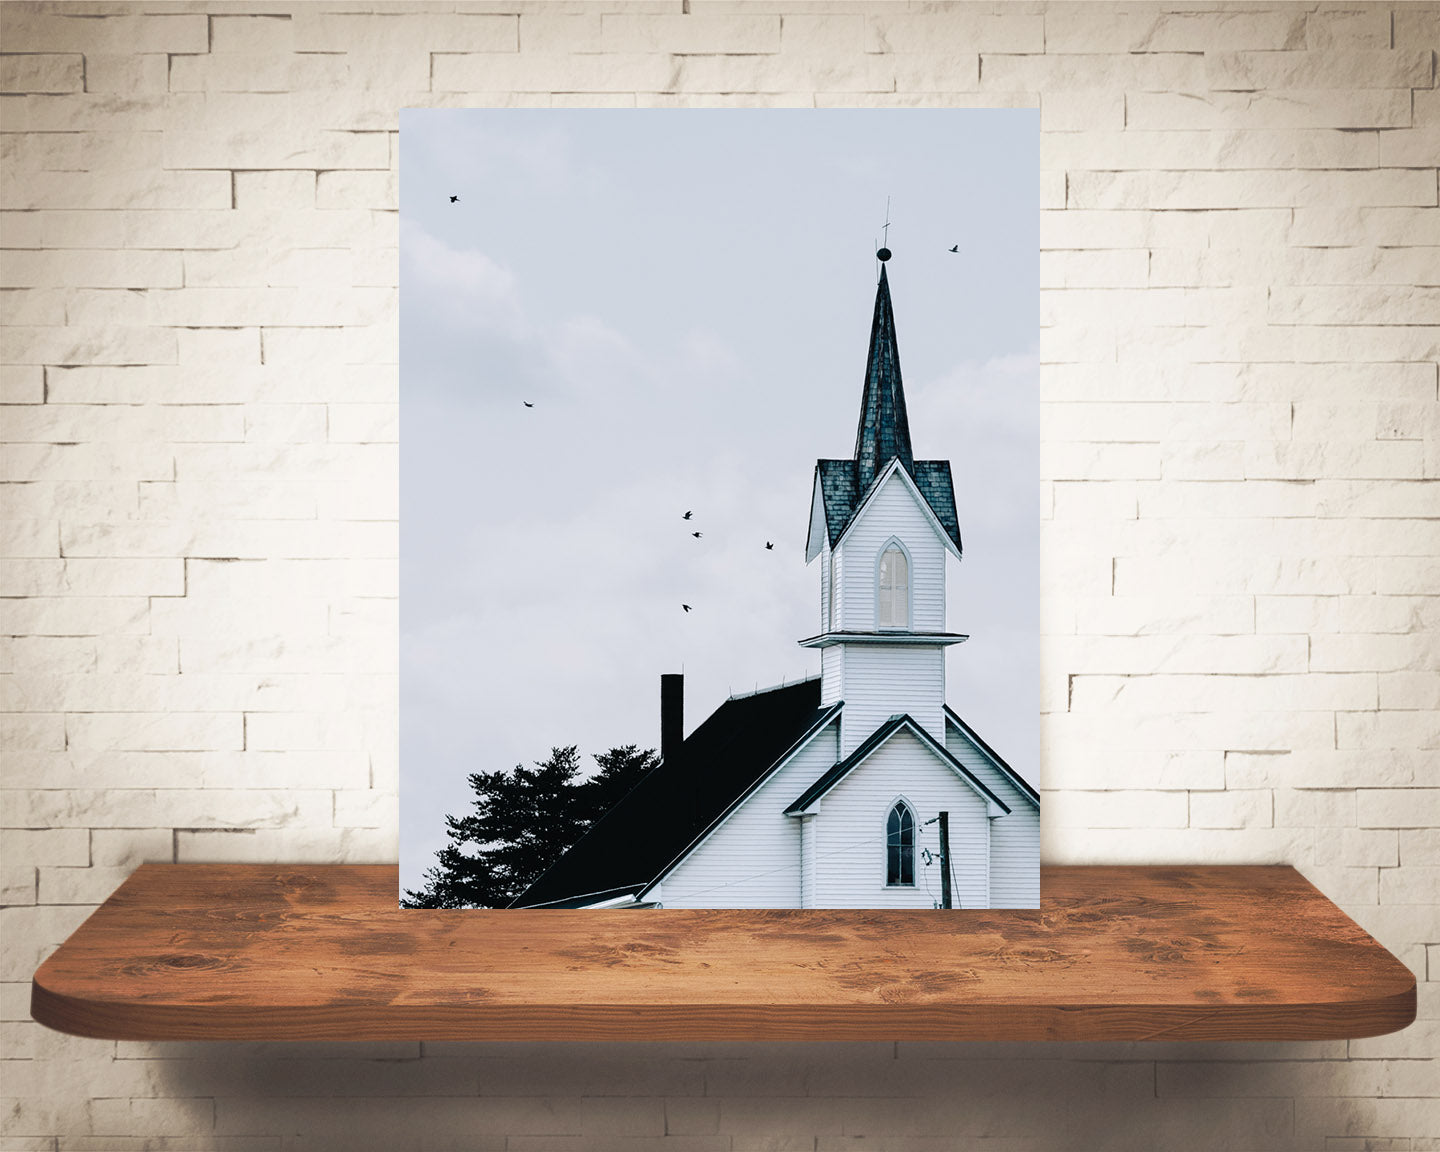 Church Photograph